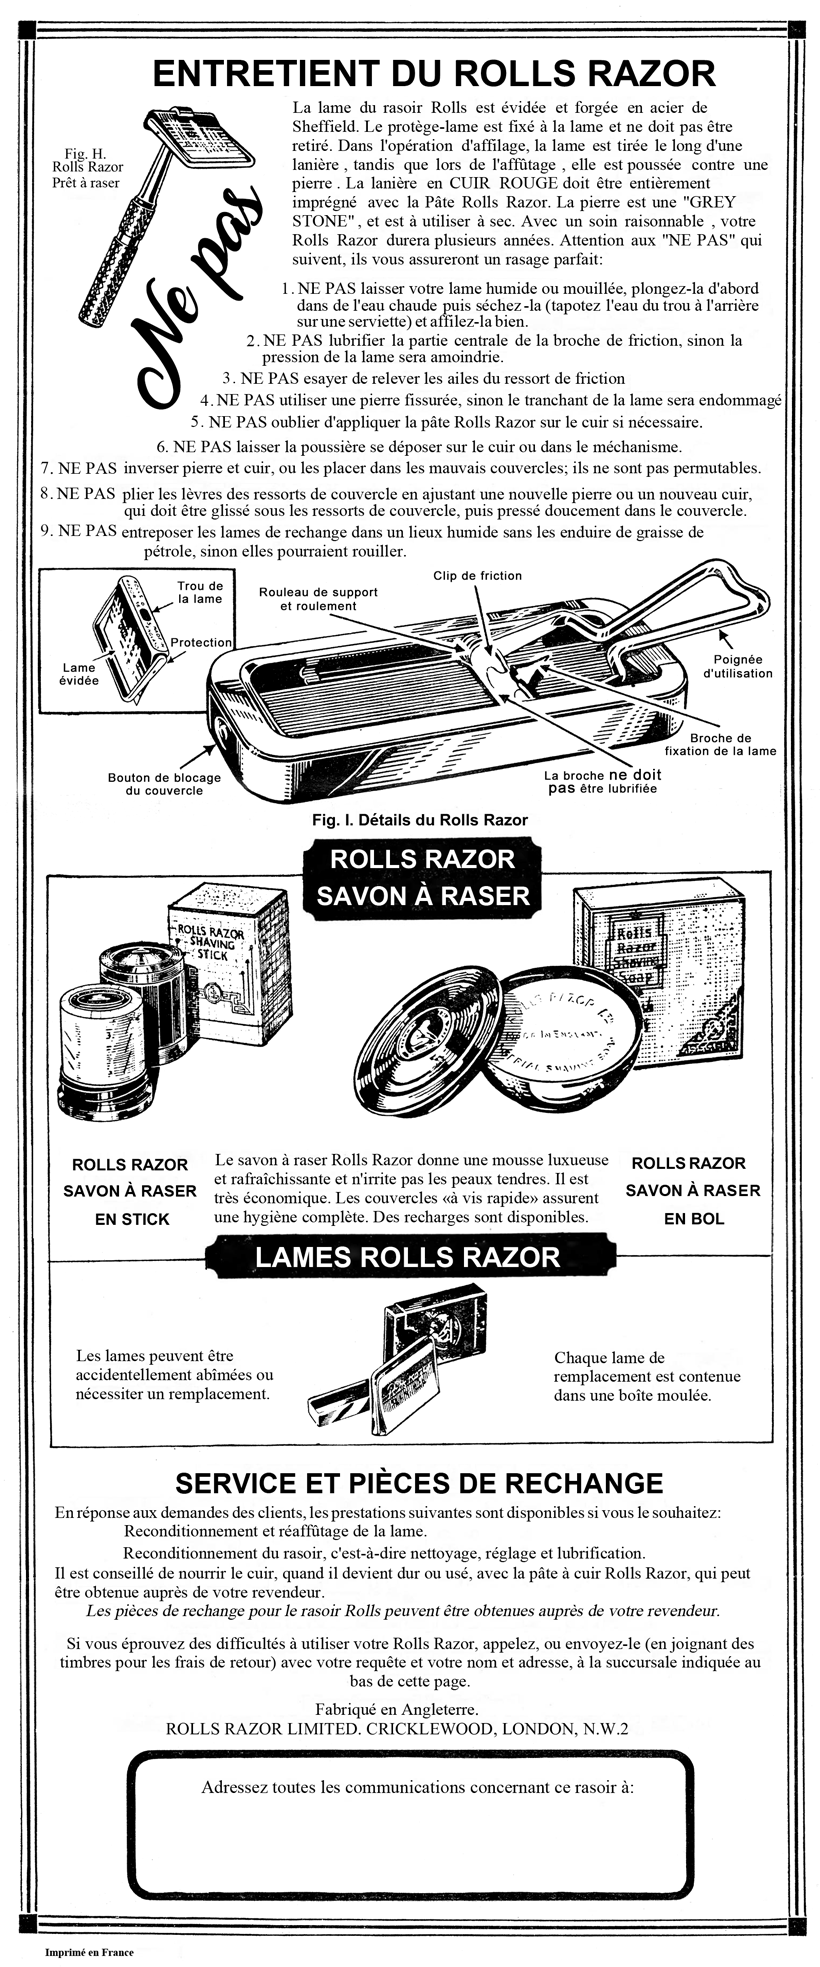 Rolls Razor Imperial N°2 - Page 2 Notice12